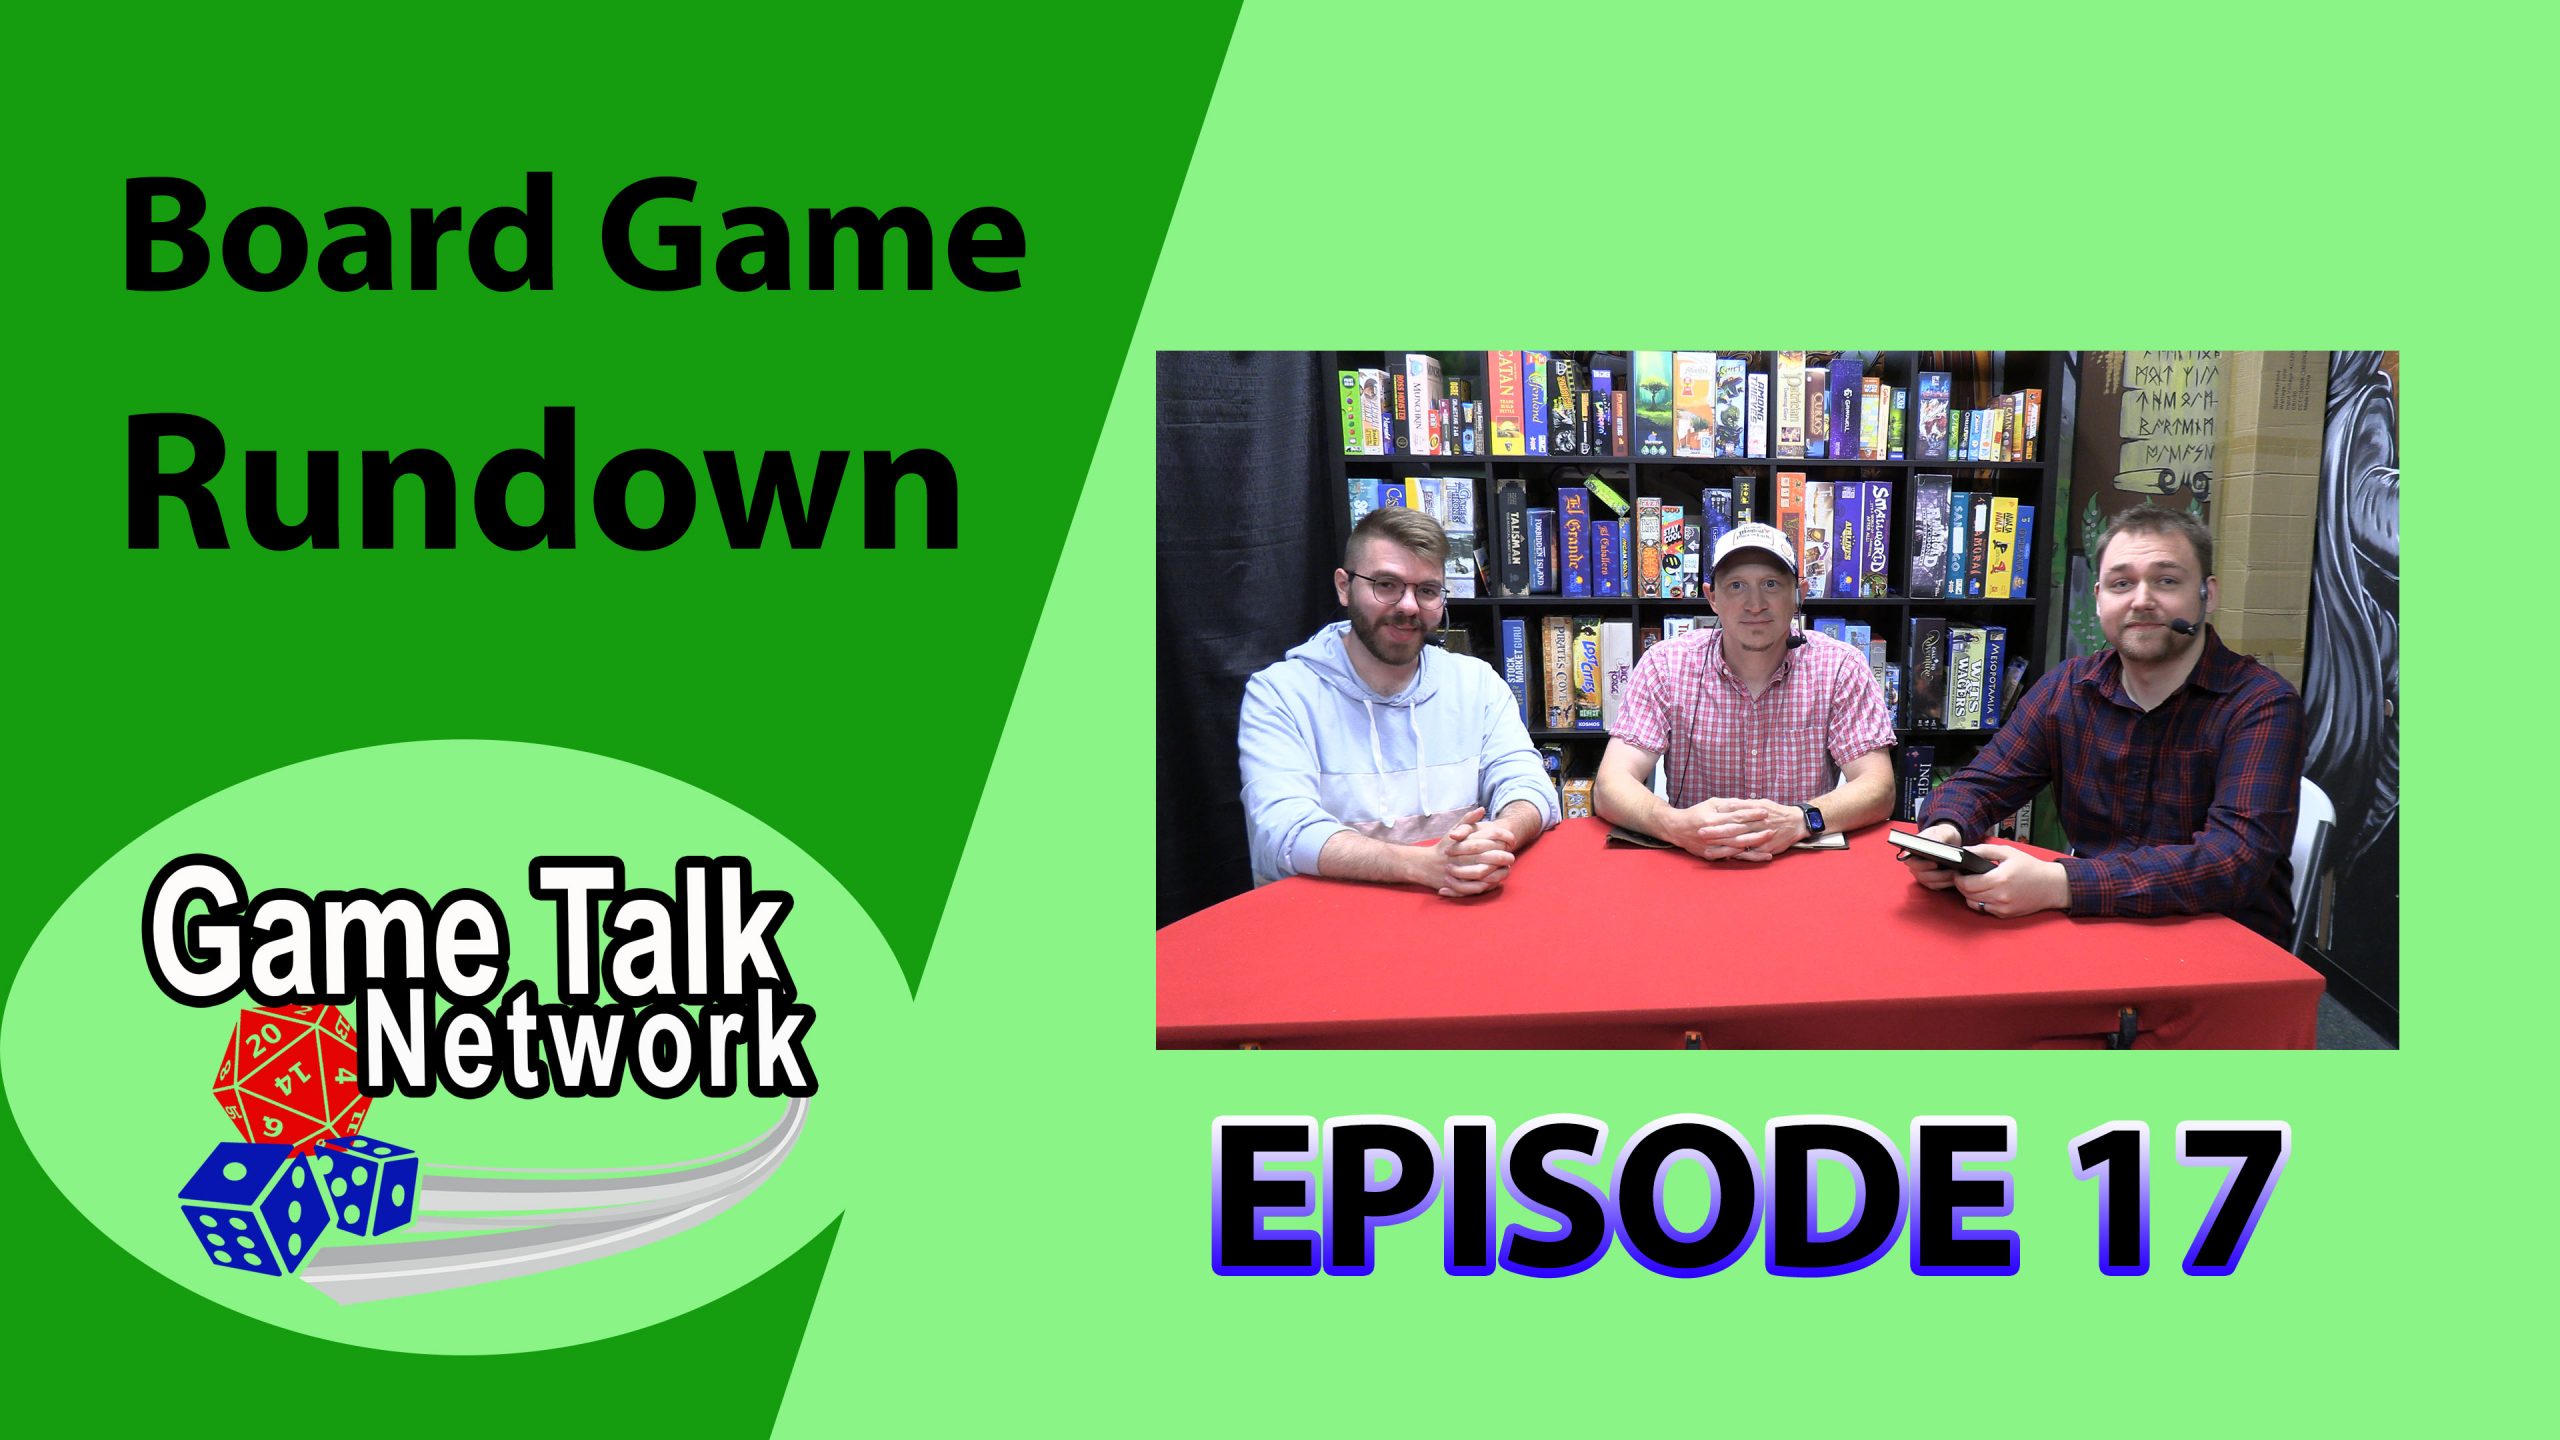 Board Game Rundown Episode 17